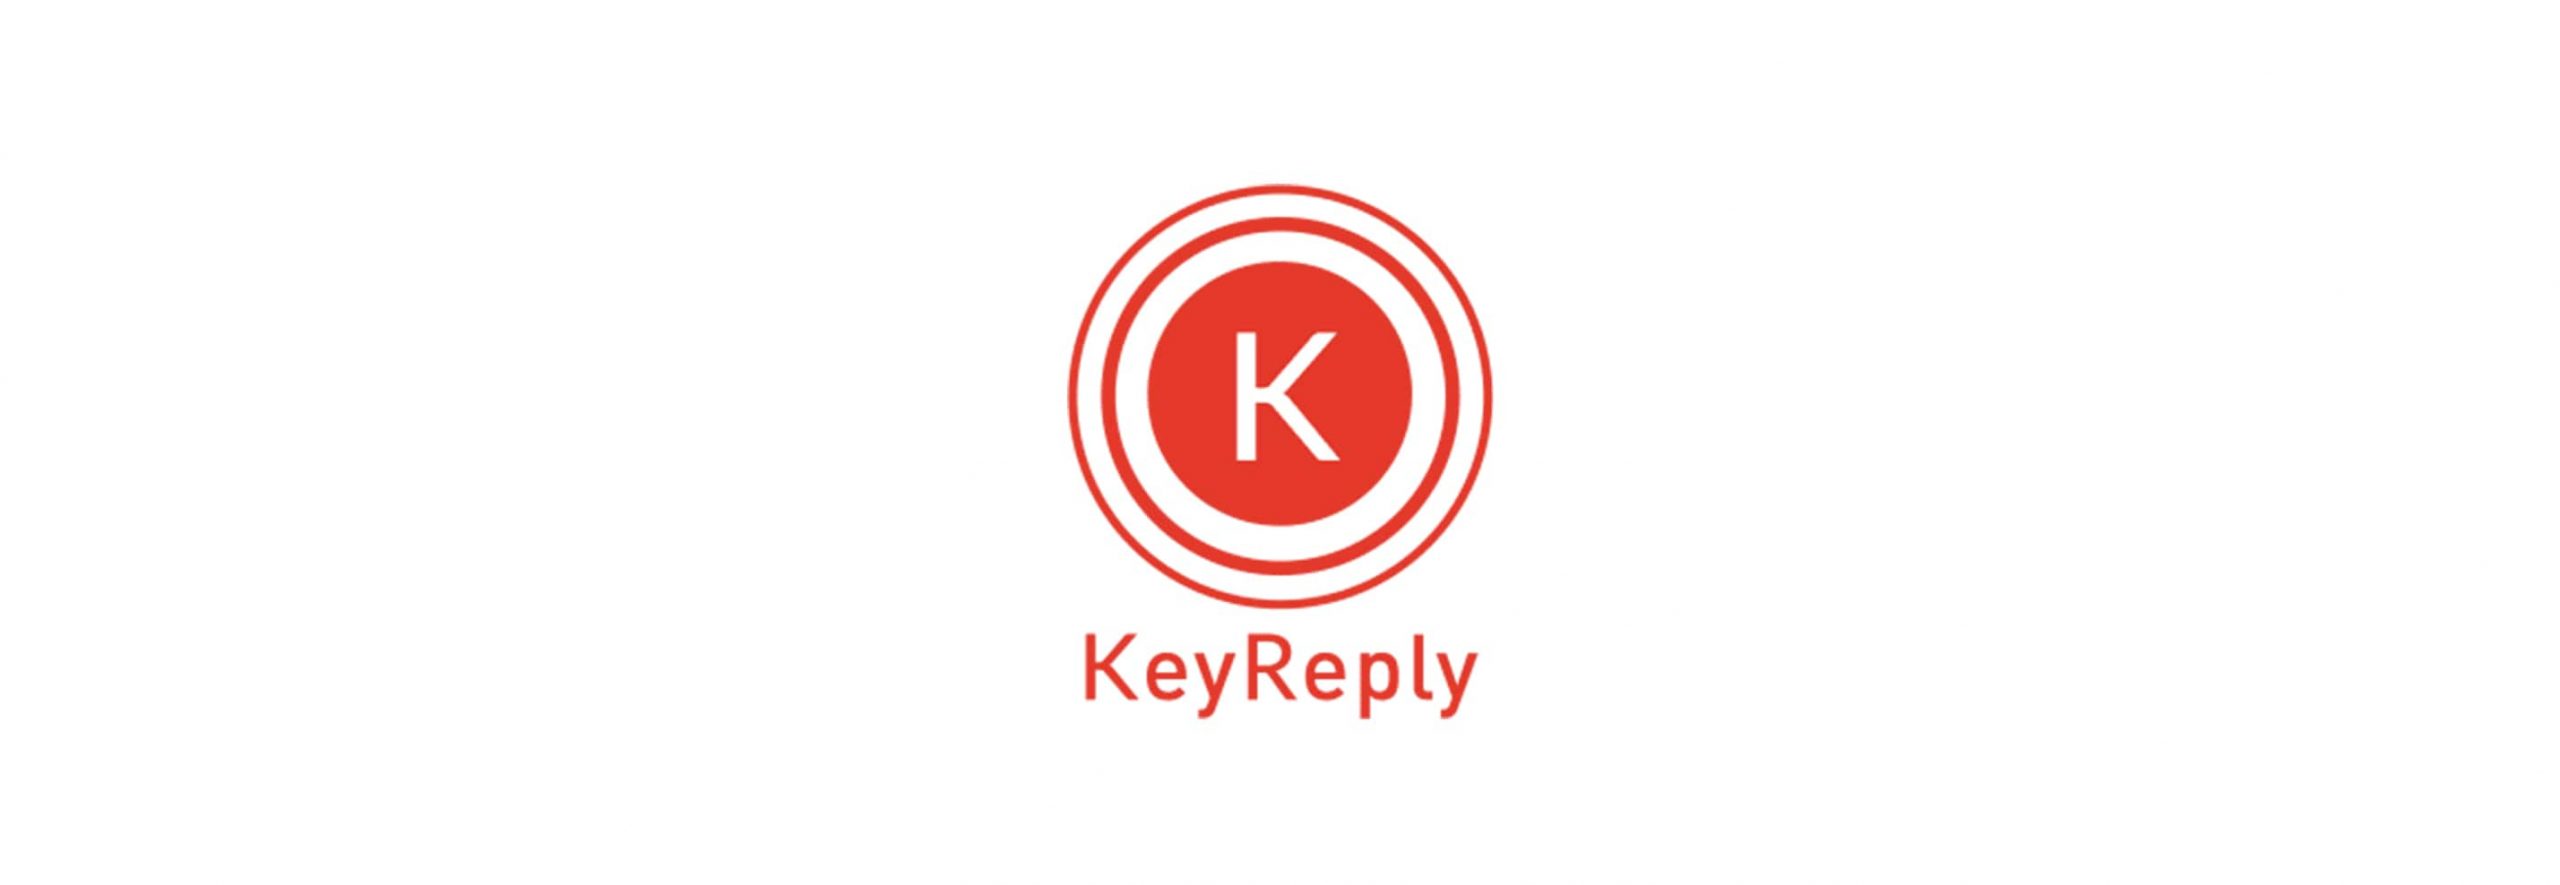 KeyReplay-min